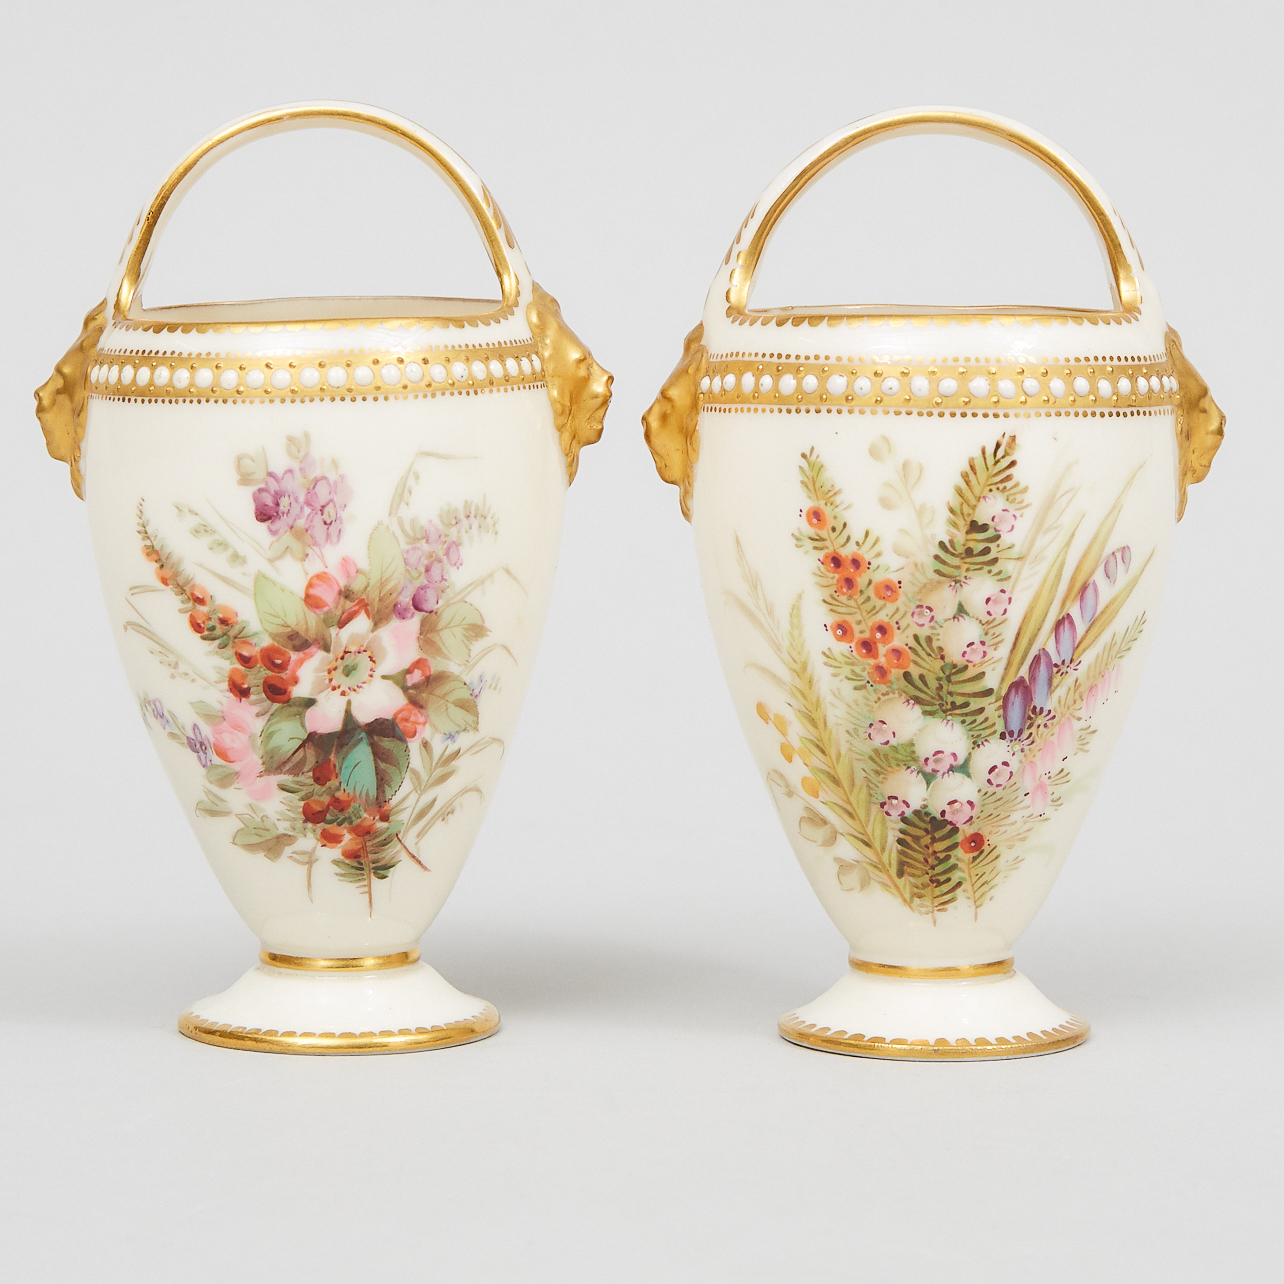 Pair of Royal Worcester 'Jeweled' Basket Vases, 1874